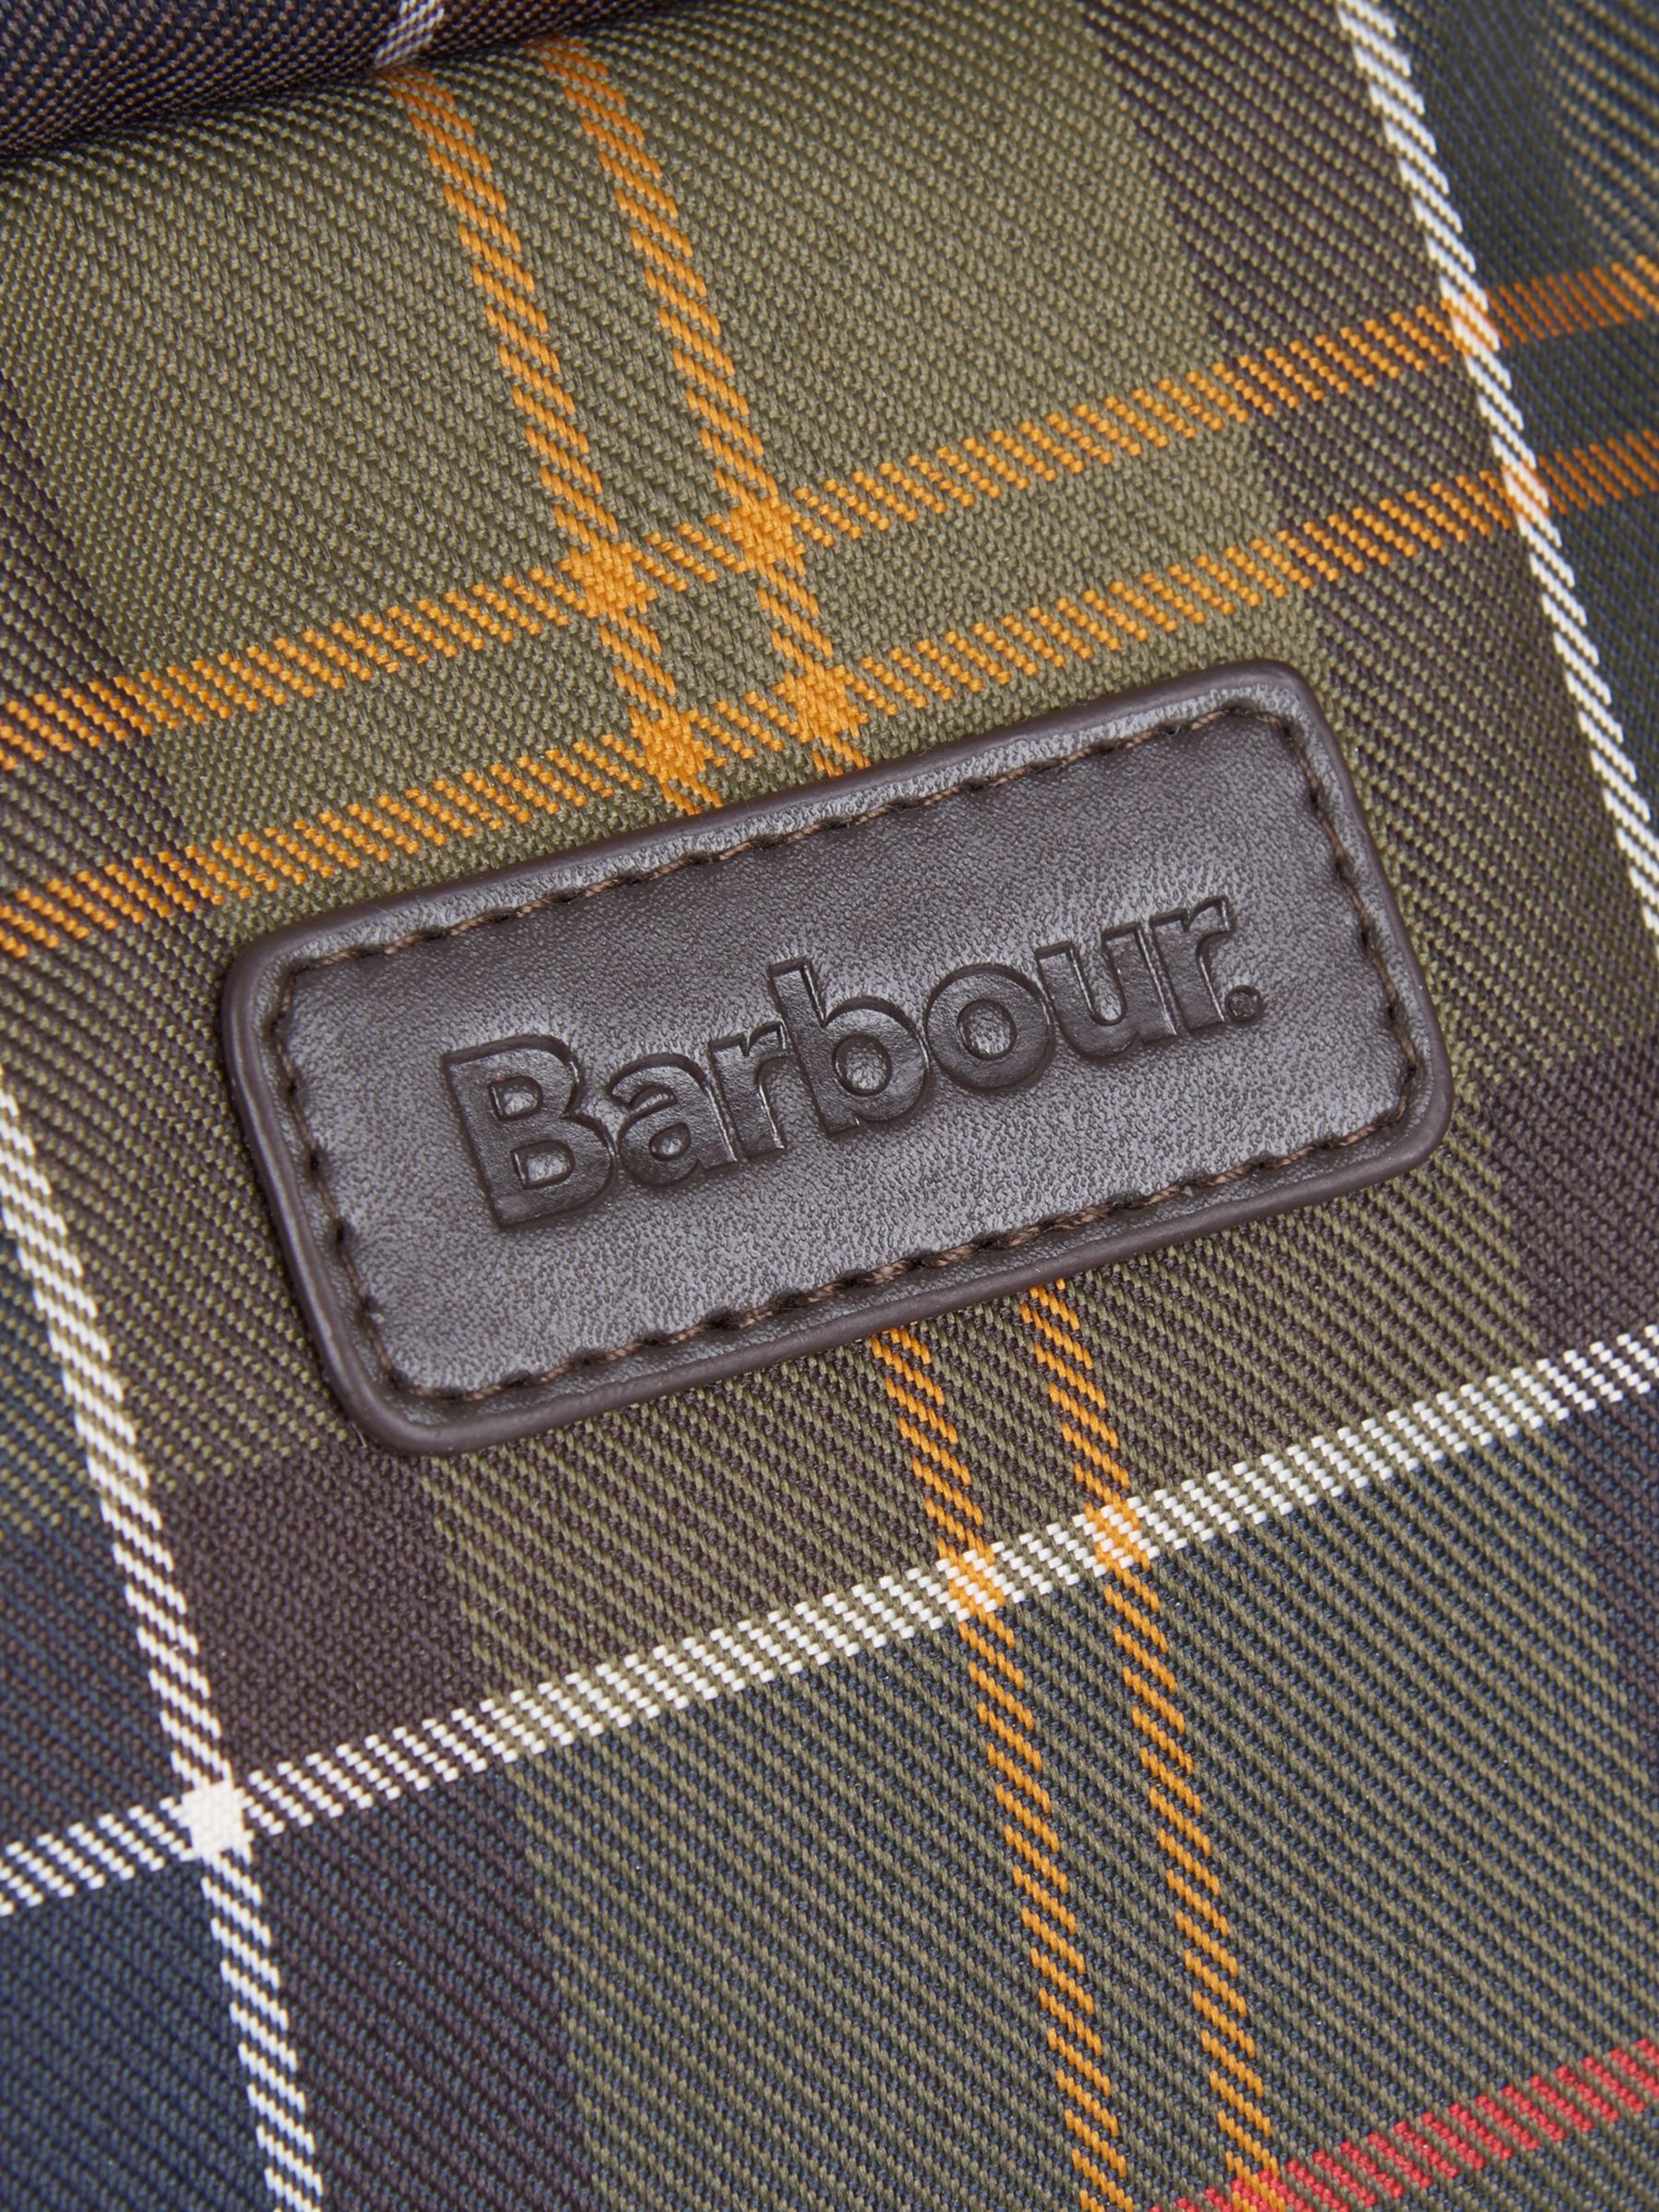 Buy Barbour Torridon Classic Tartan Holdall Online at johnlewis.com